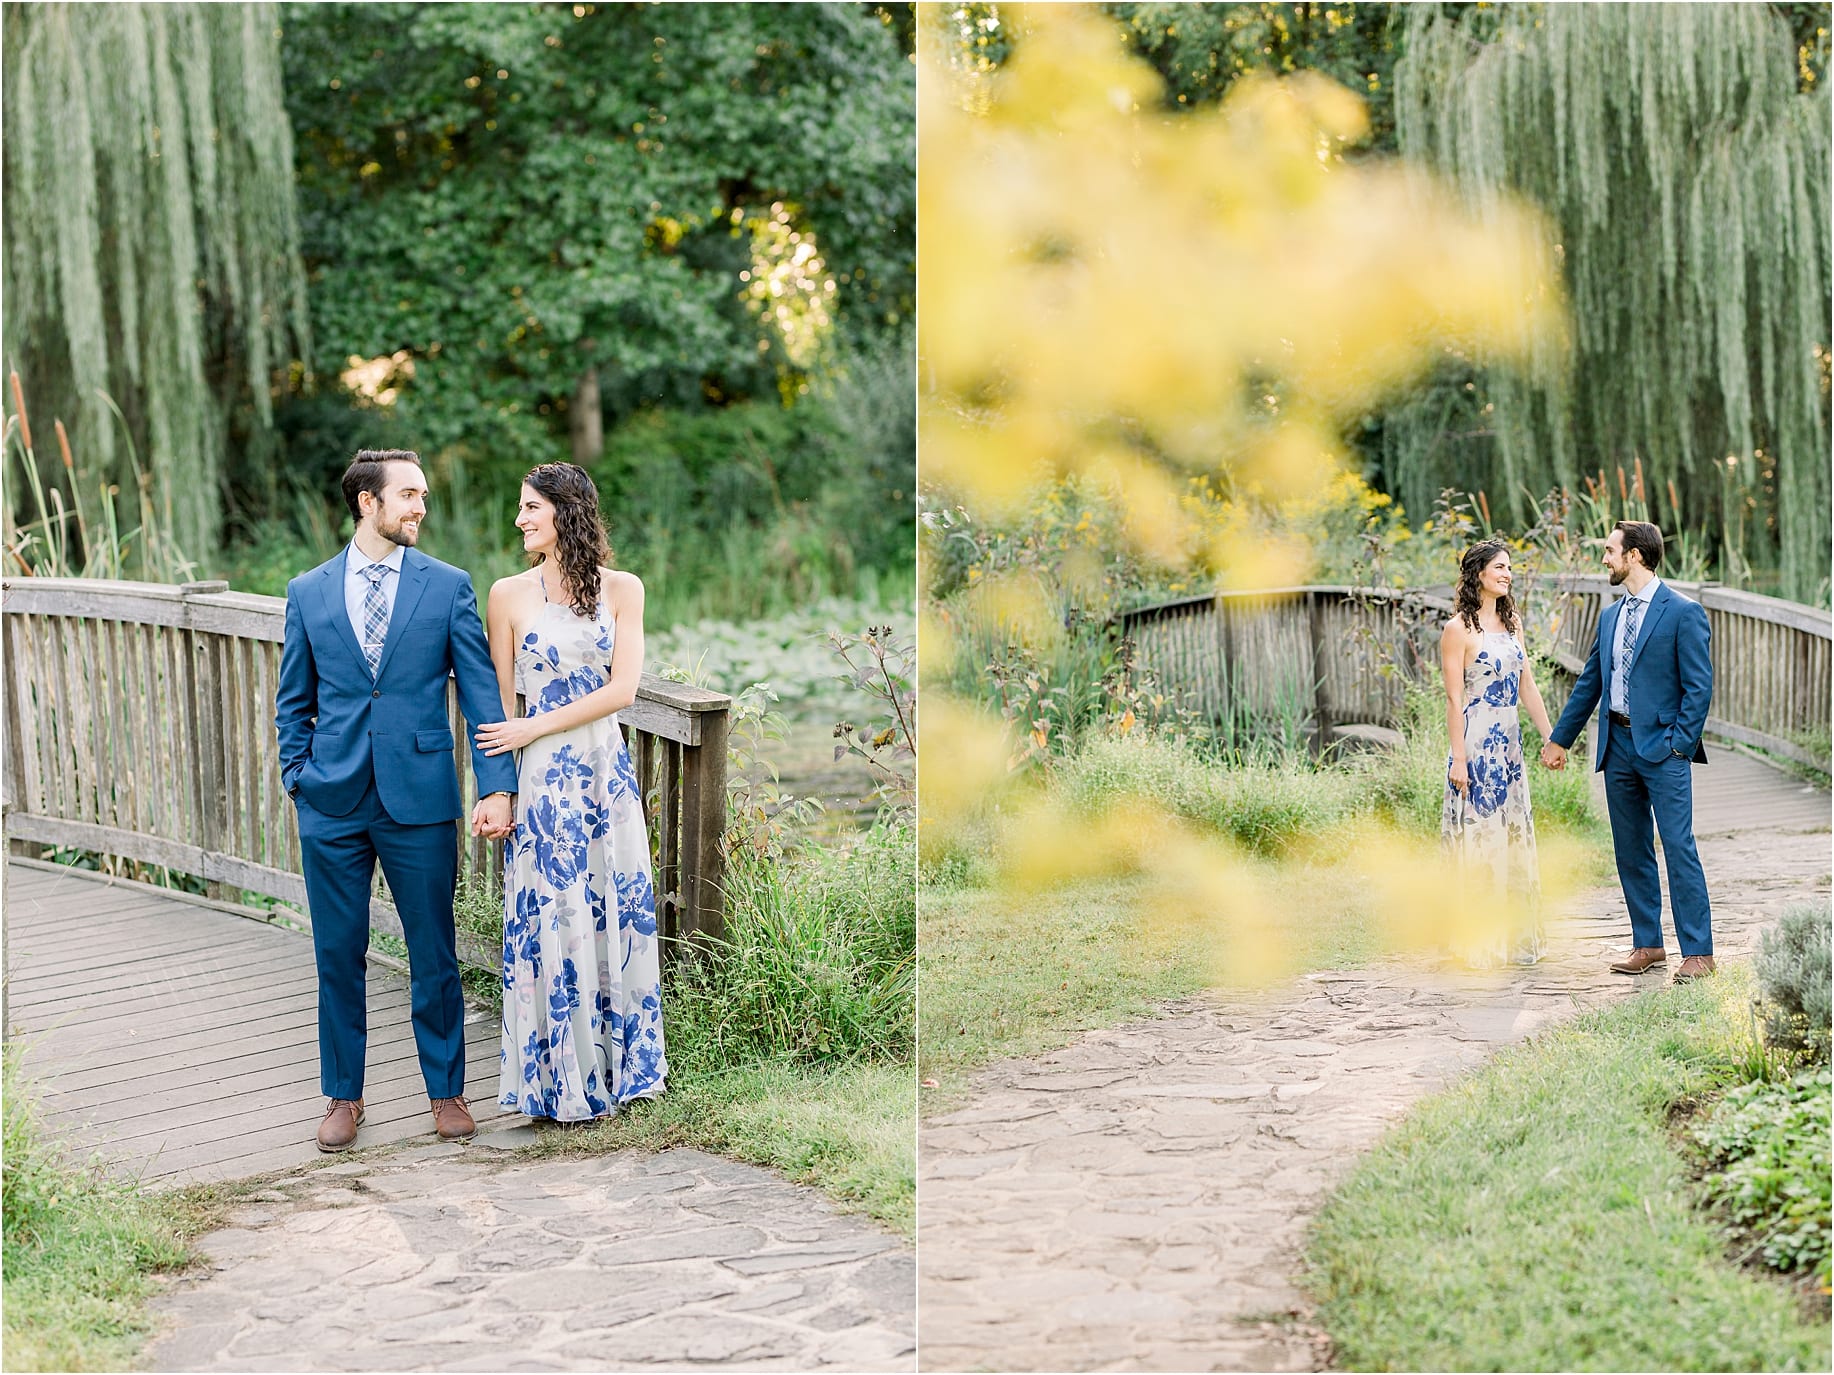 Meadowlark Botanical Gardens Engagements DC wedding photographer erika mills_0007.jpg